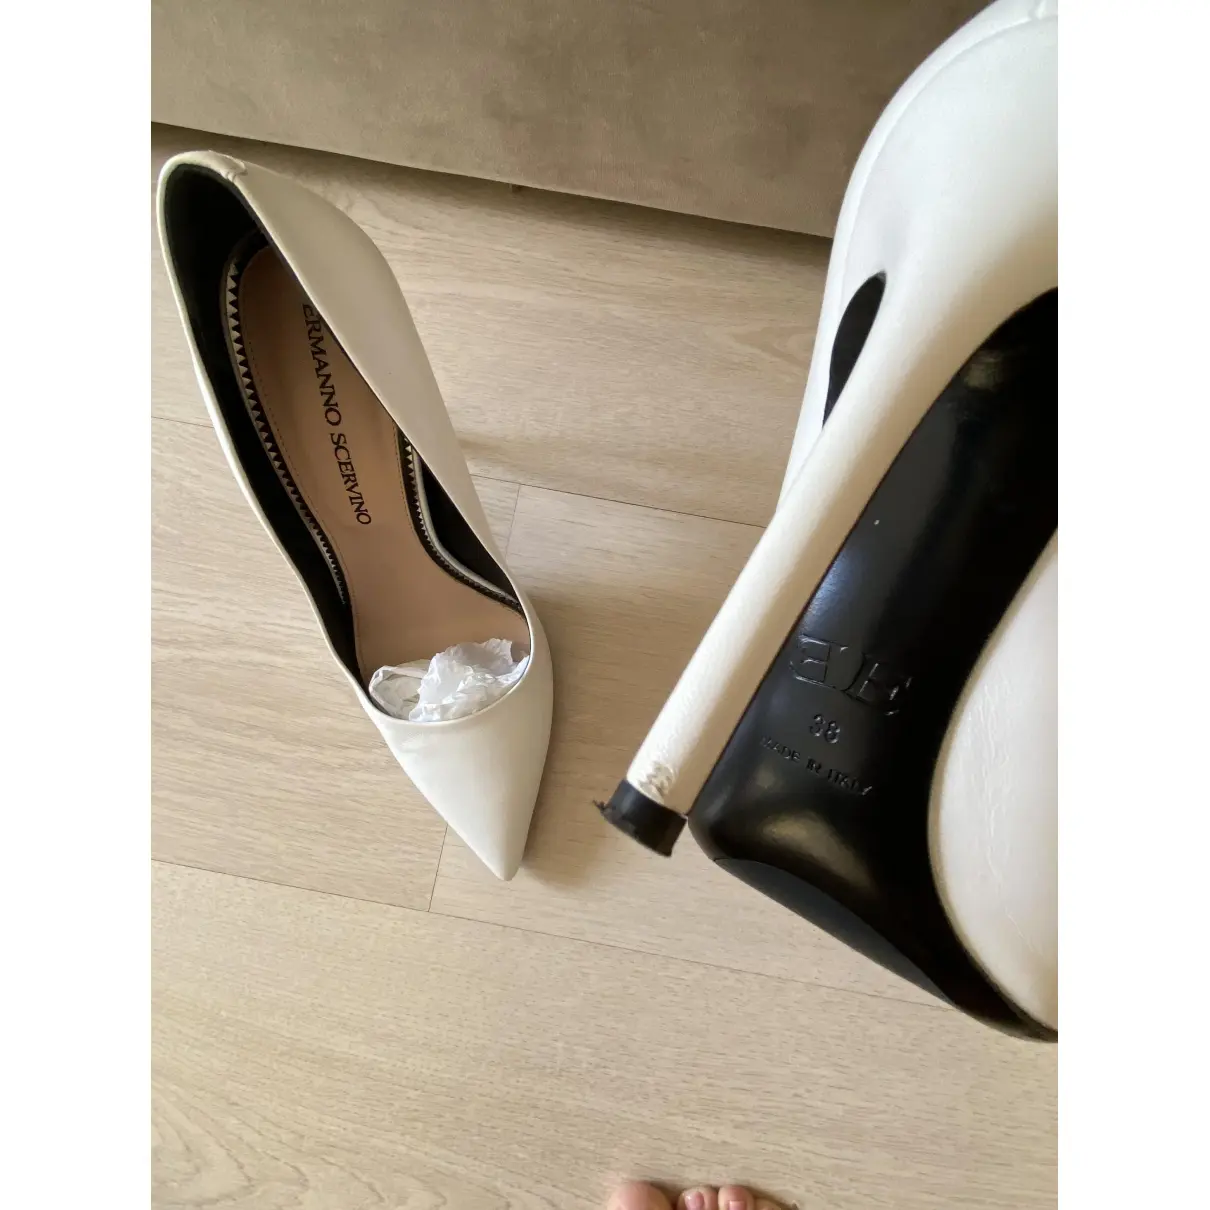 Leather heels Ermanno Scervino